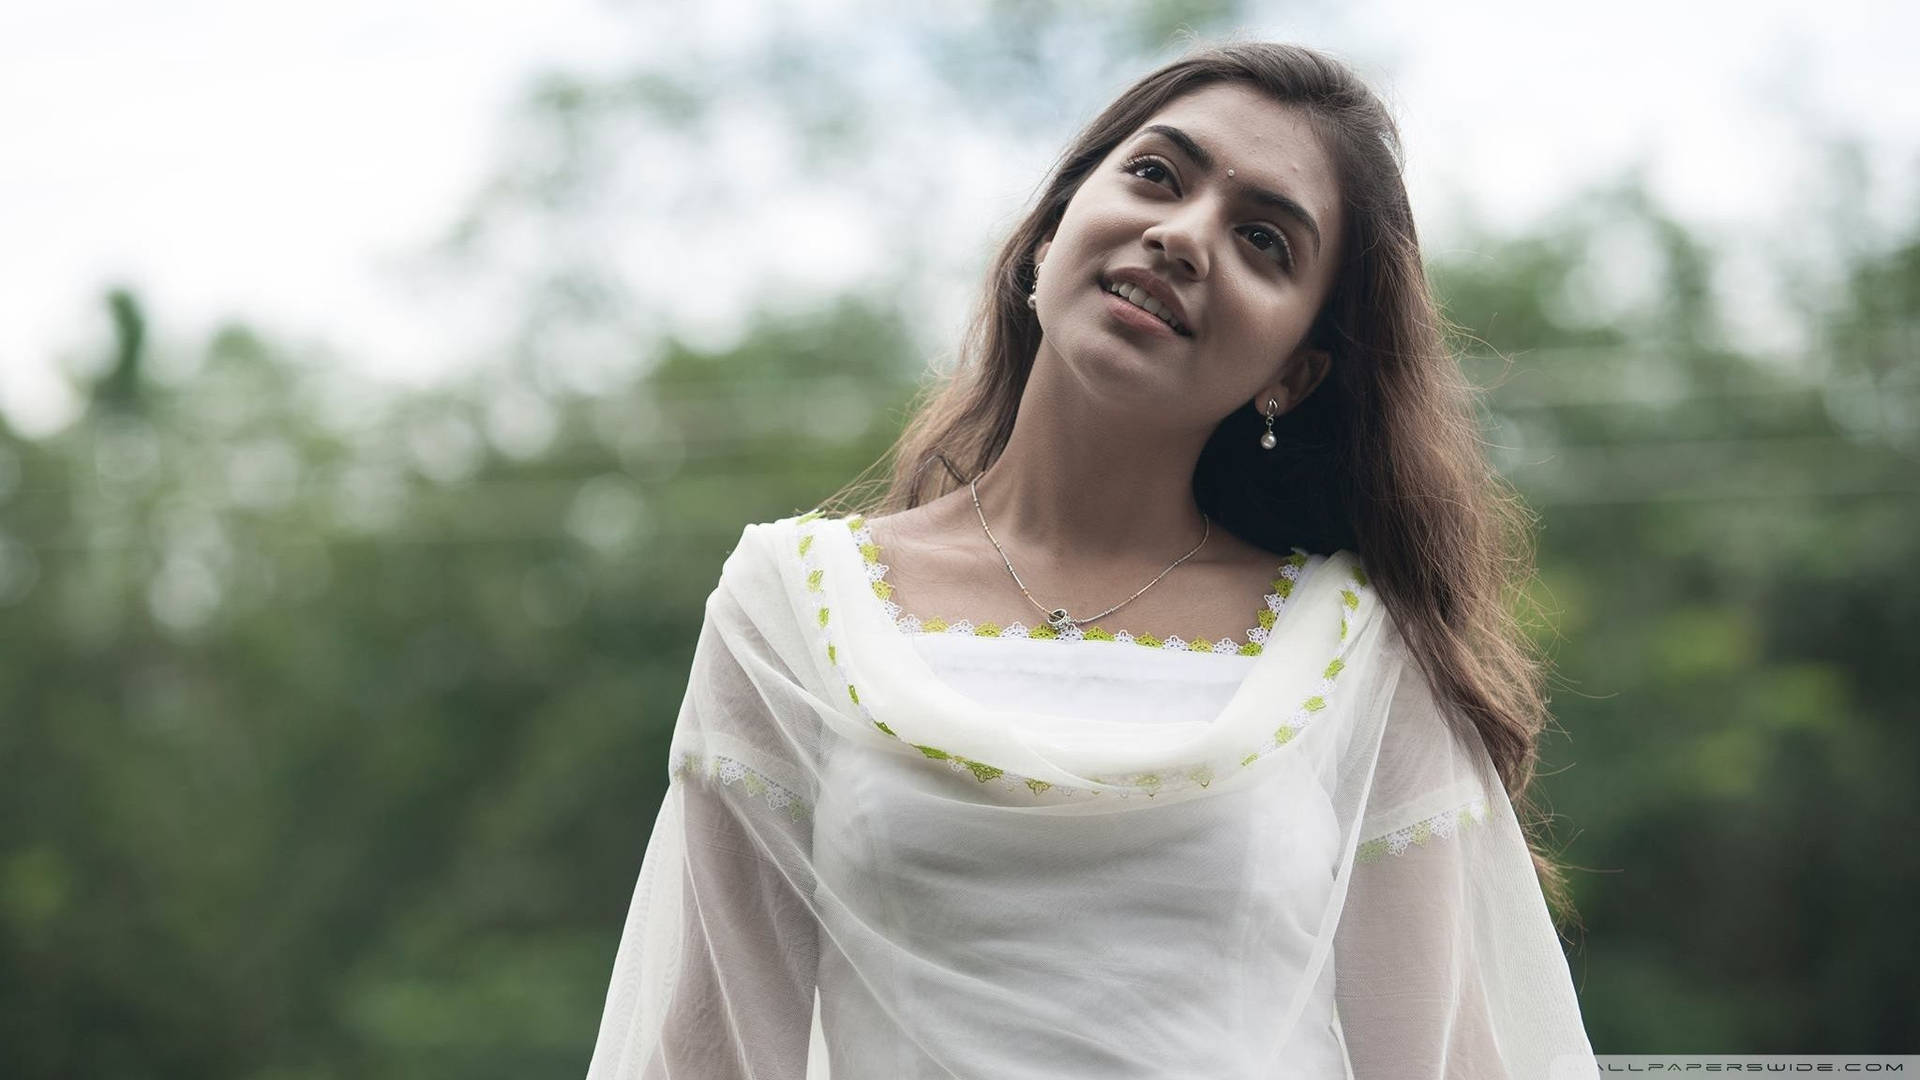 Elegance Personified - Nazriya In Hd White Dress Background